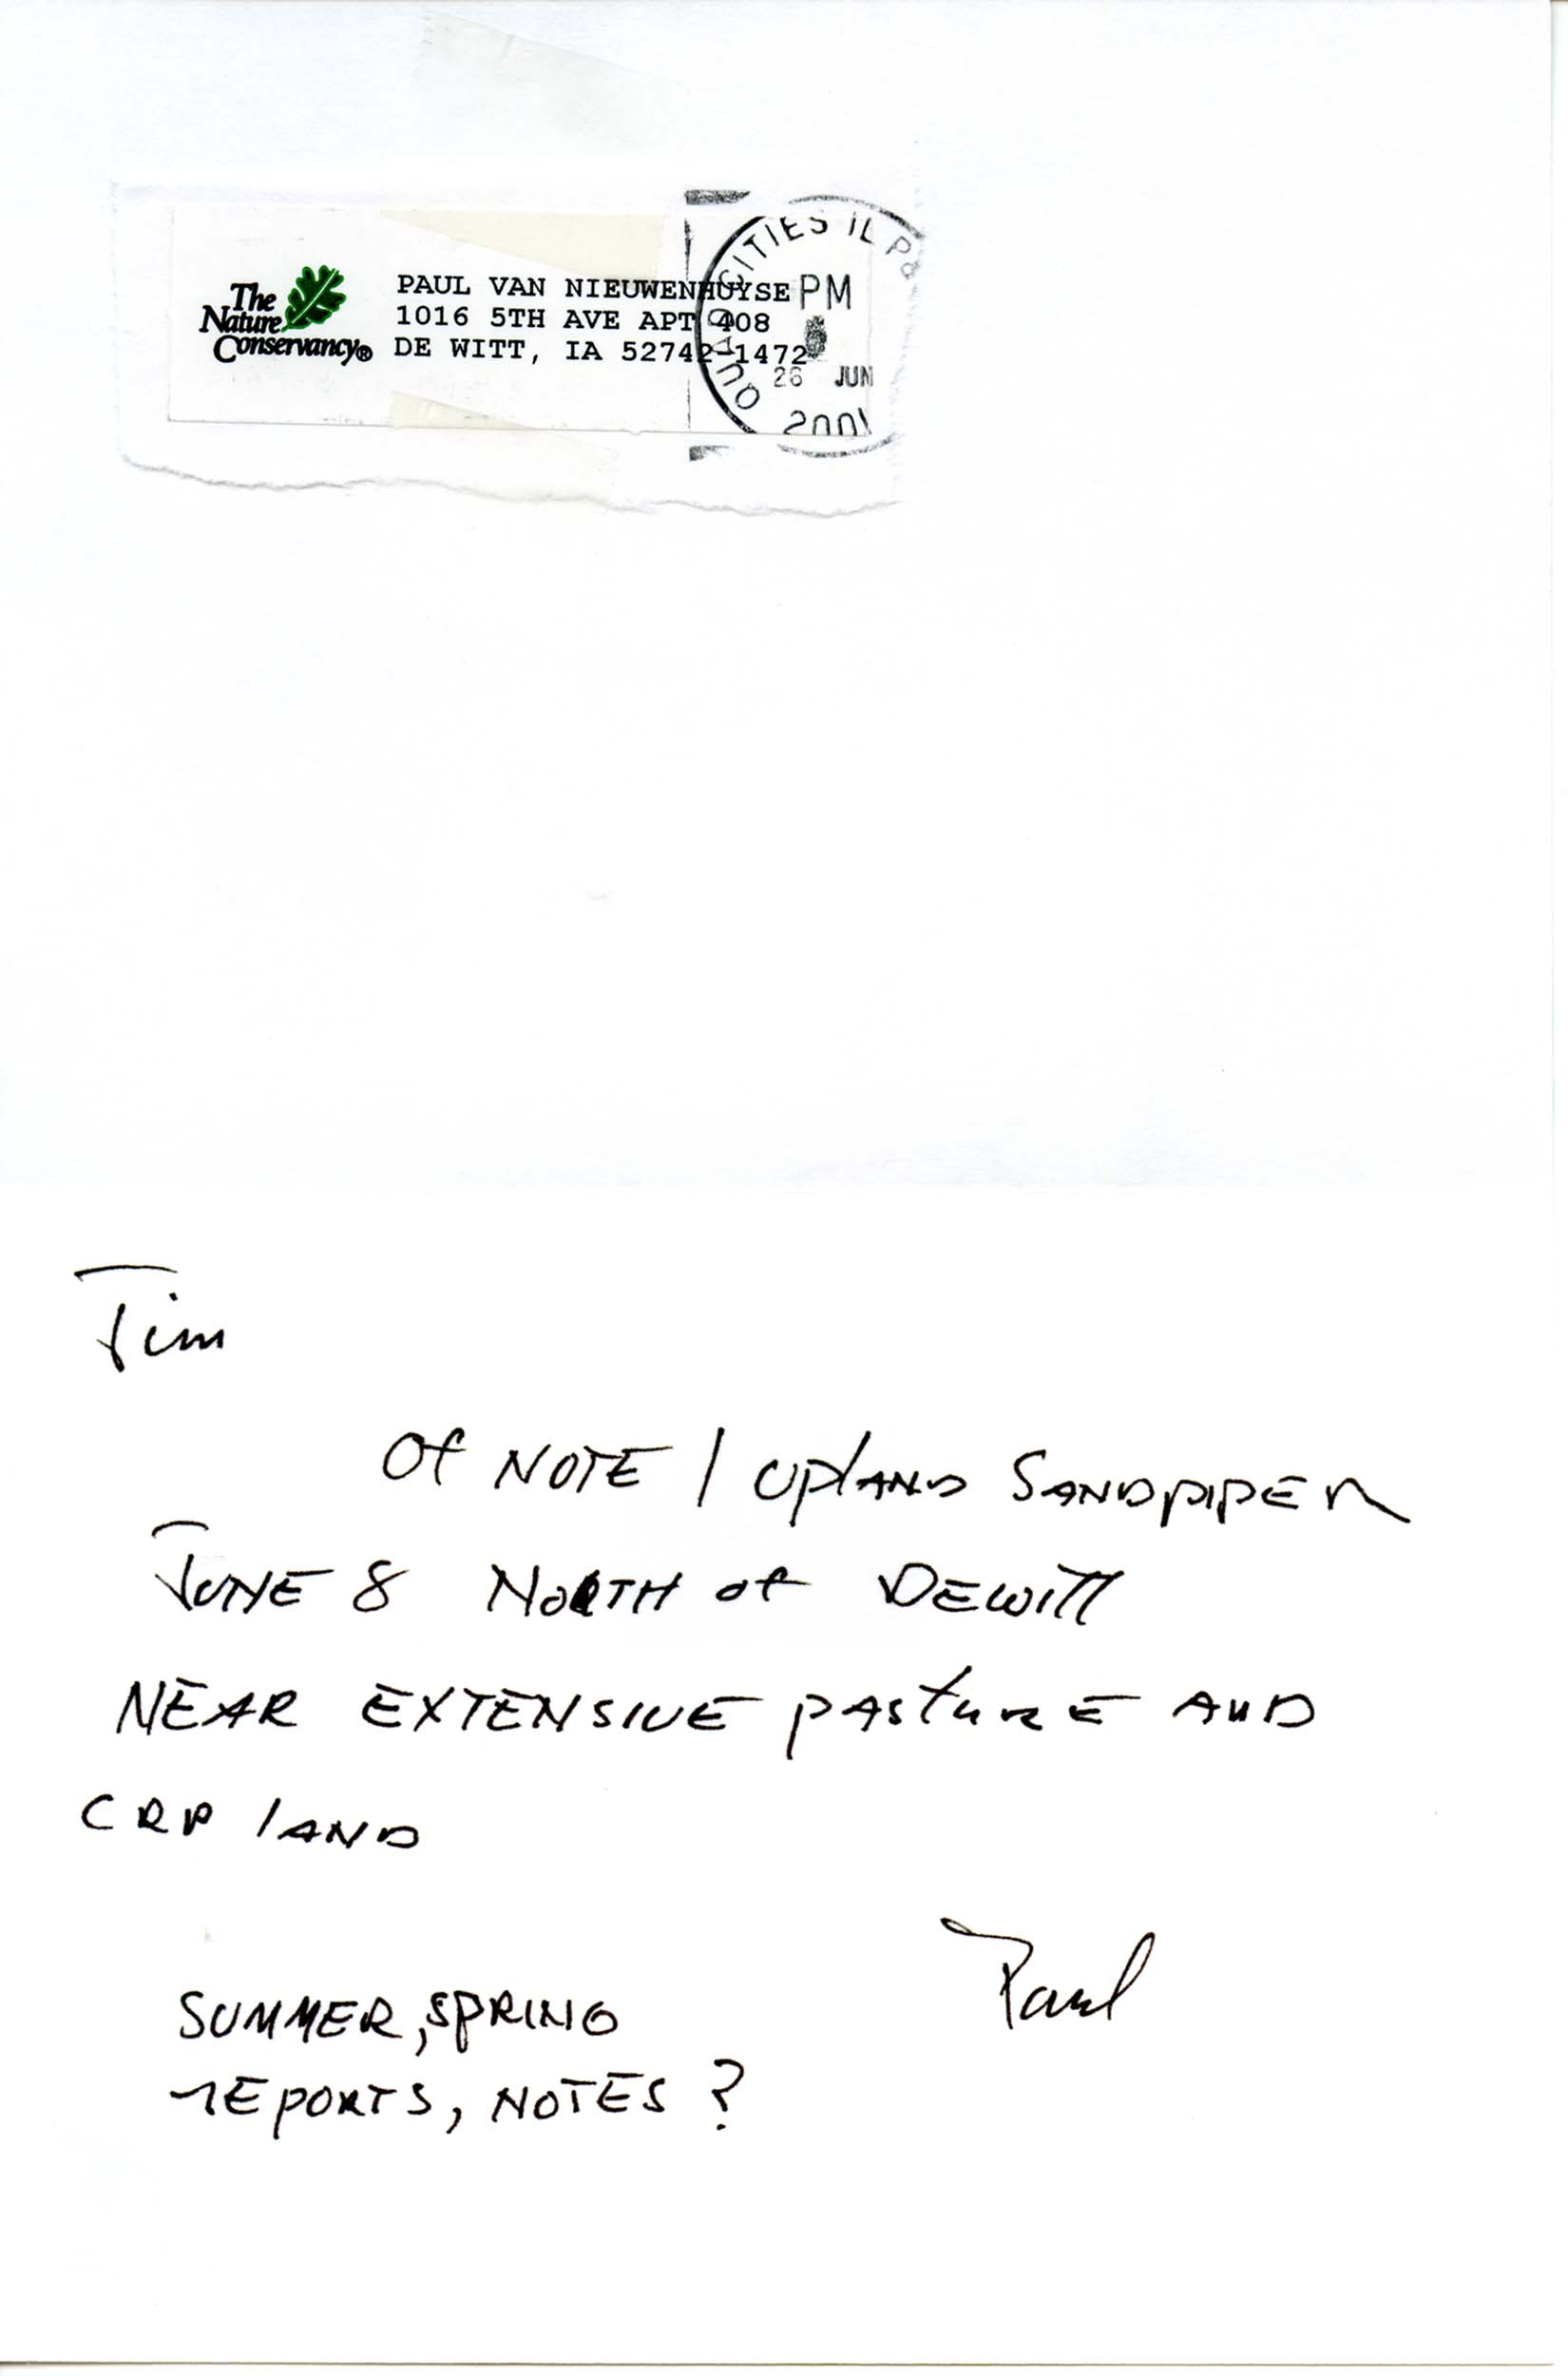 Paul Van Nieuwenhuyse letter to James J. Dinsmore regarding an Upland Sandpiper sighting, June 8, 2001